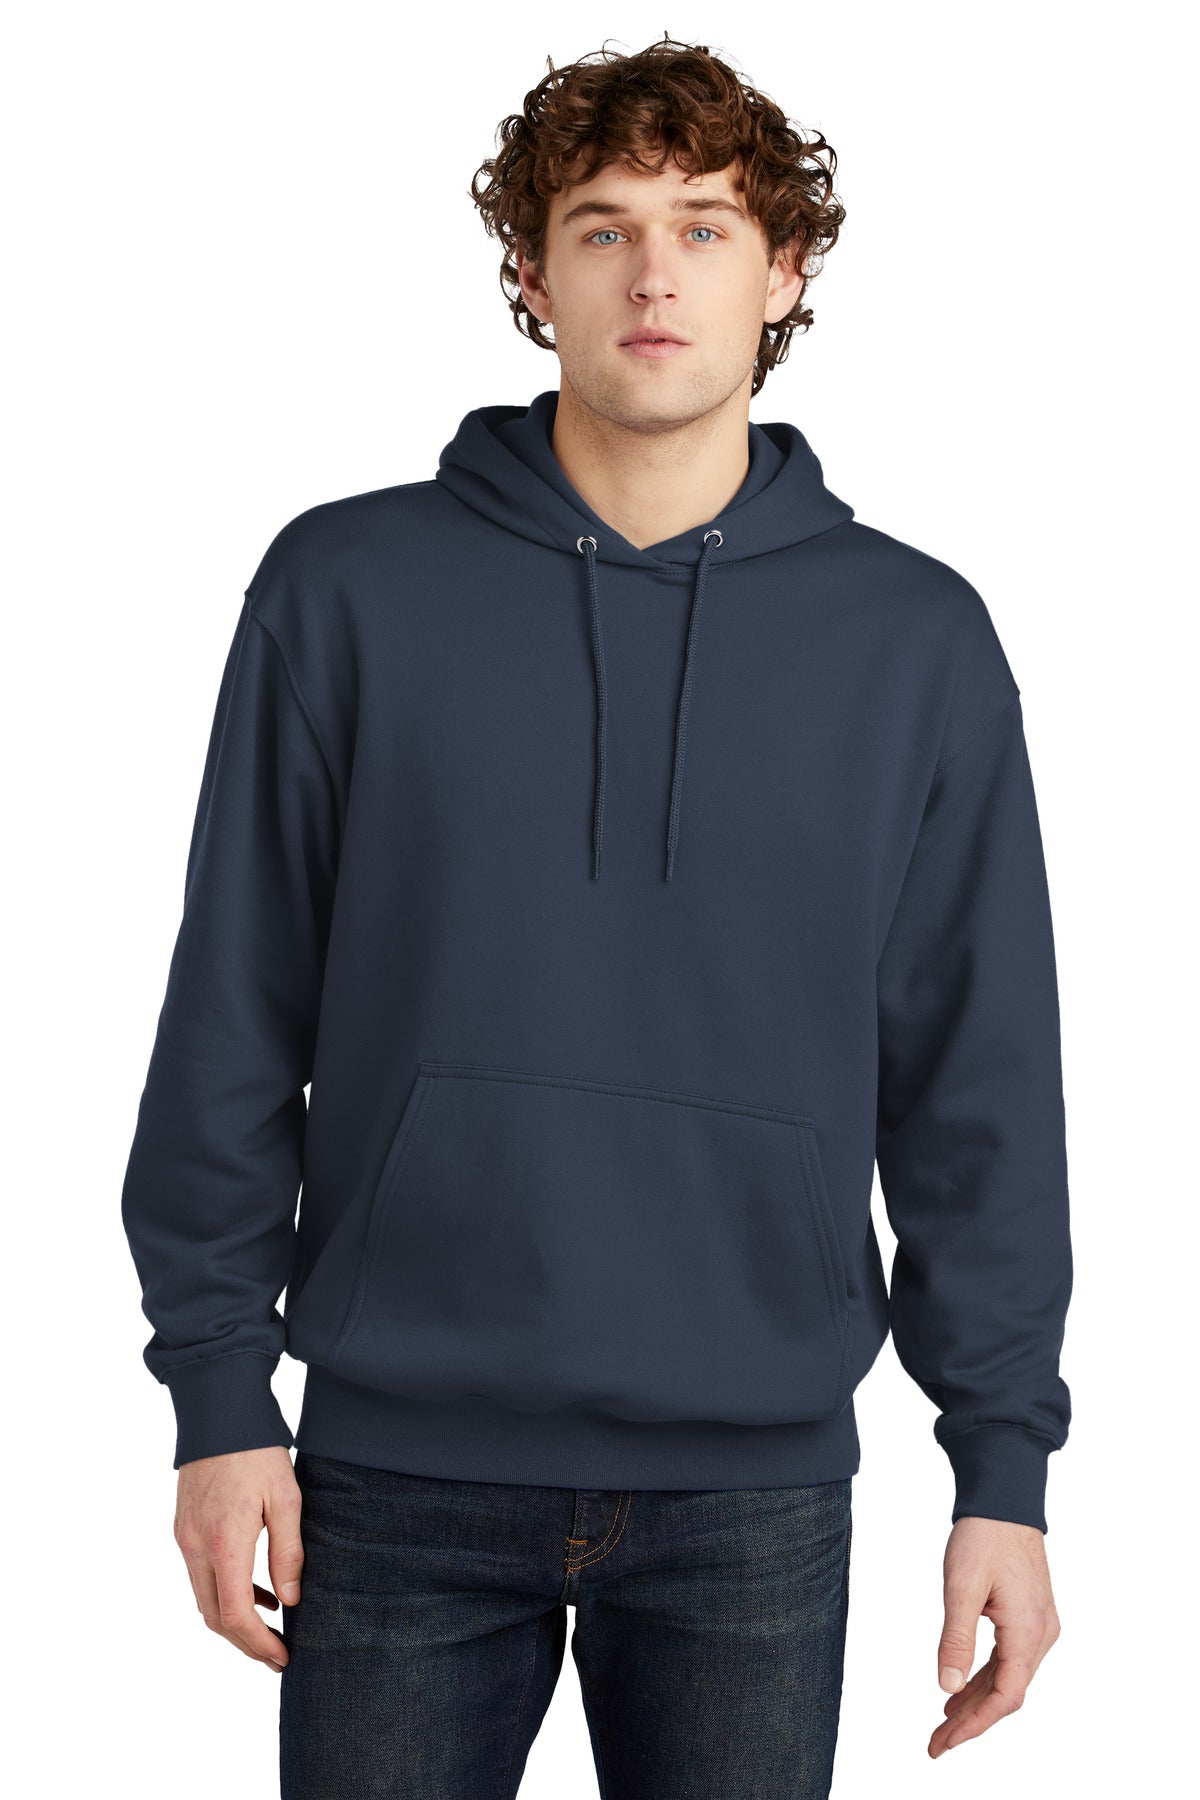 Port & Company® Fleece Pullover Hooded Sweatshirt PC79H - DFW Impression